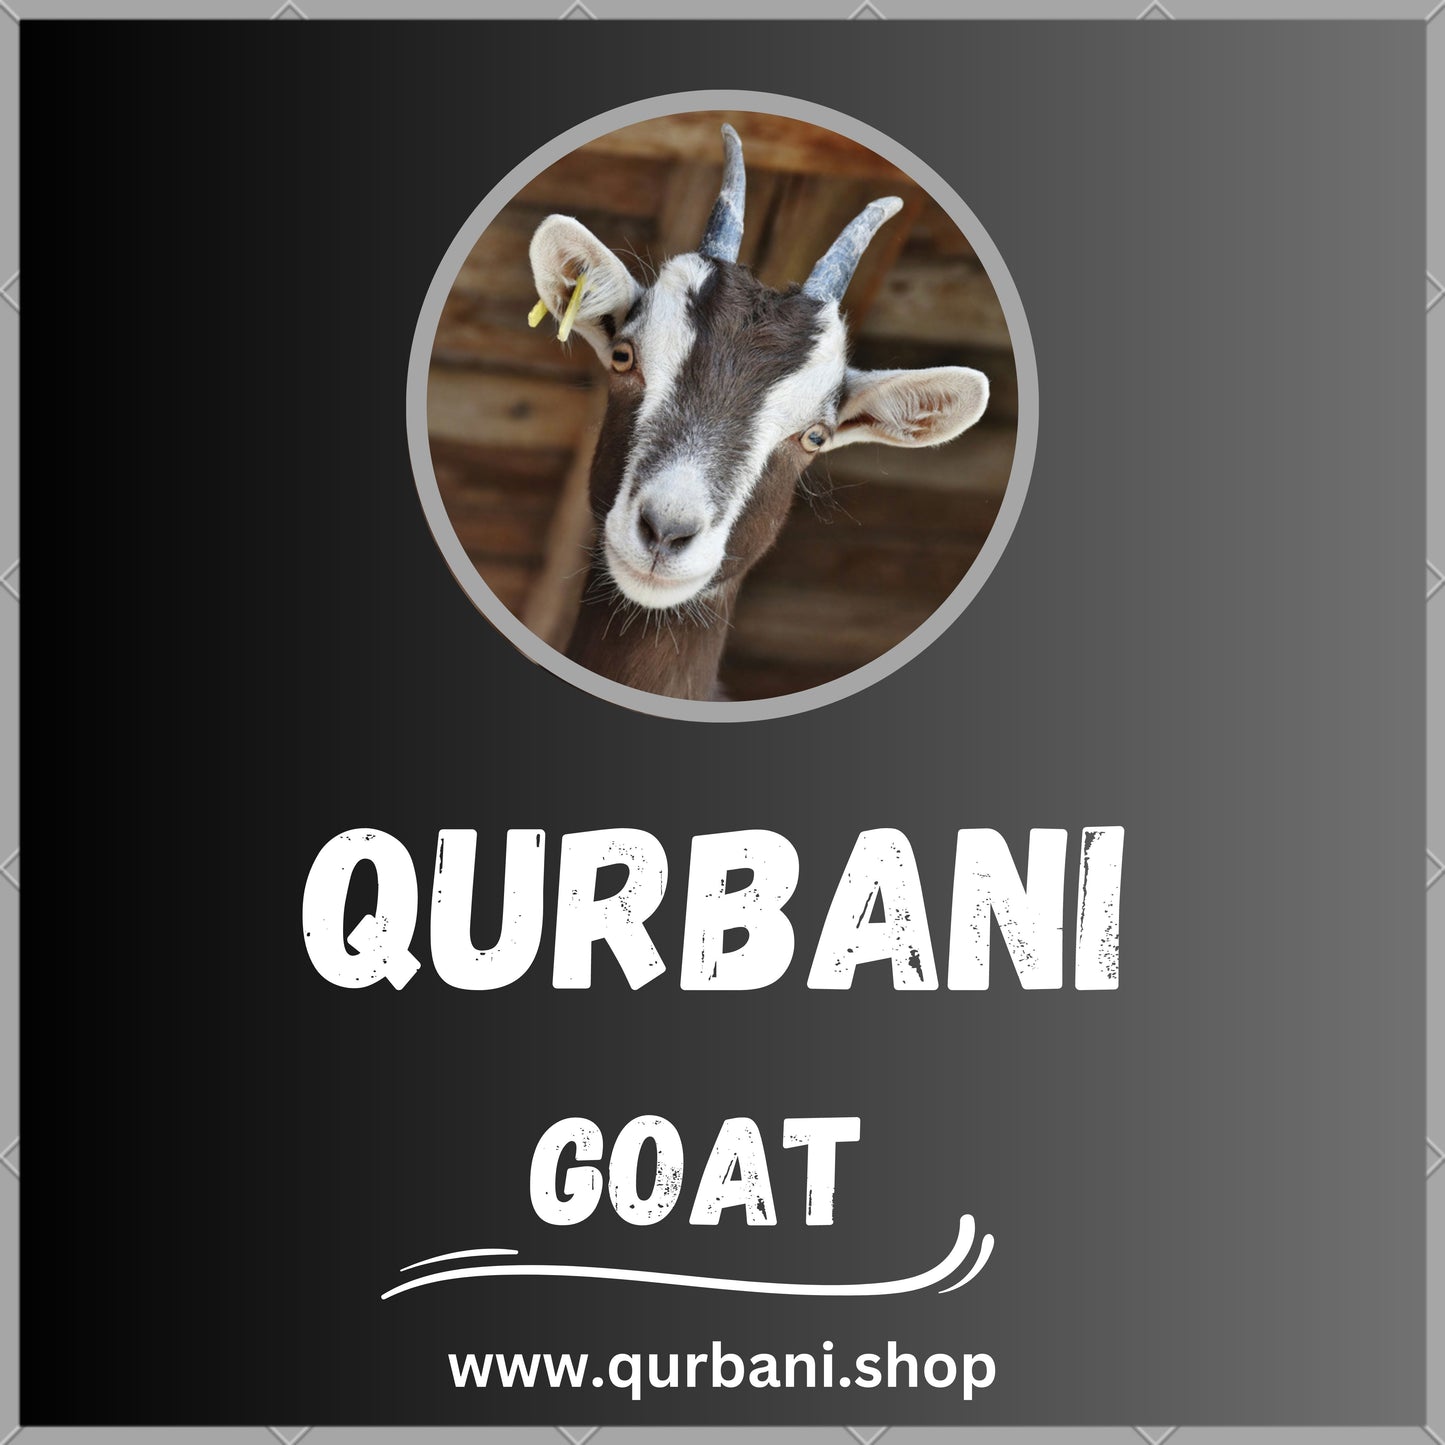 Top-Quality Qurbani Services in Orlando - Order Your Eid Sacrifice Now!